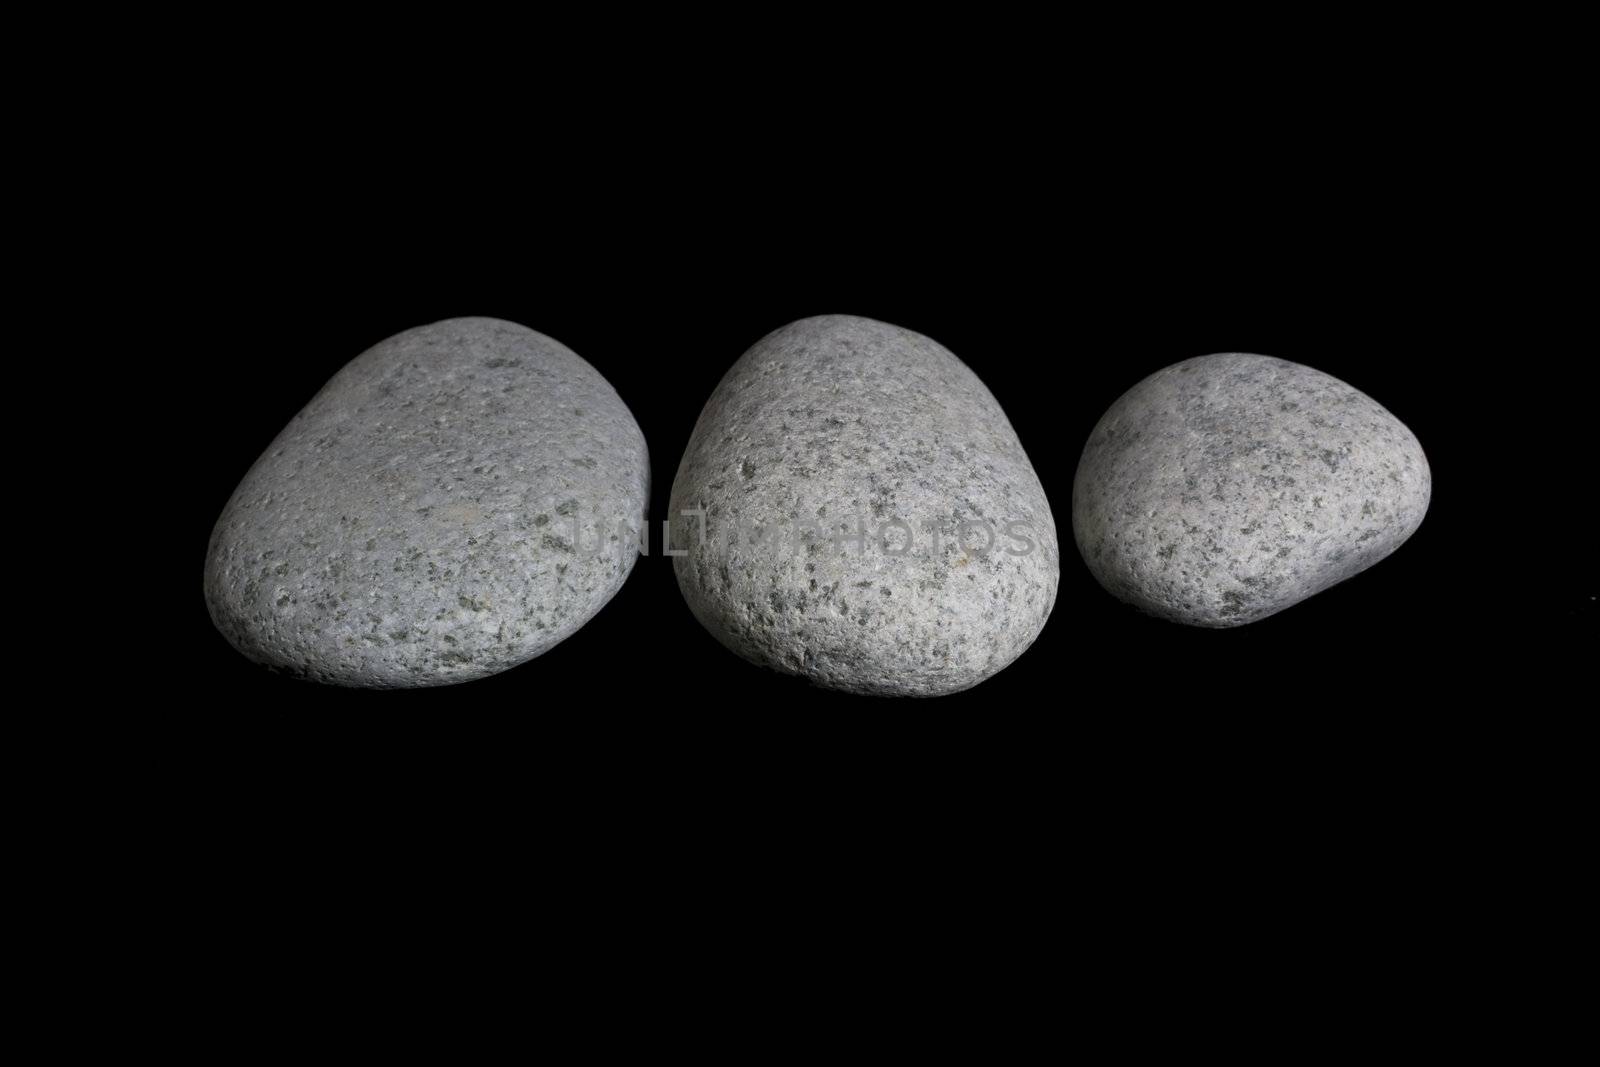 Three pebble stone against black background.